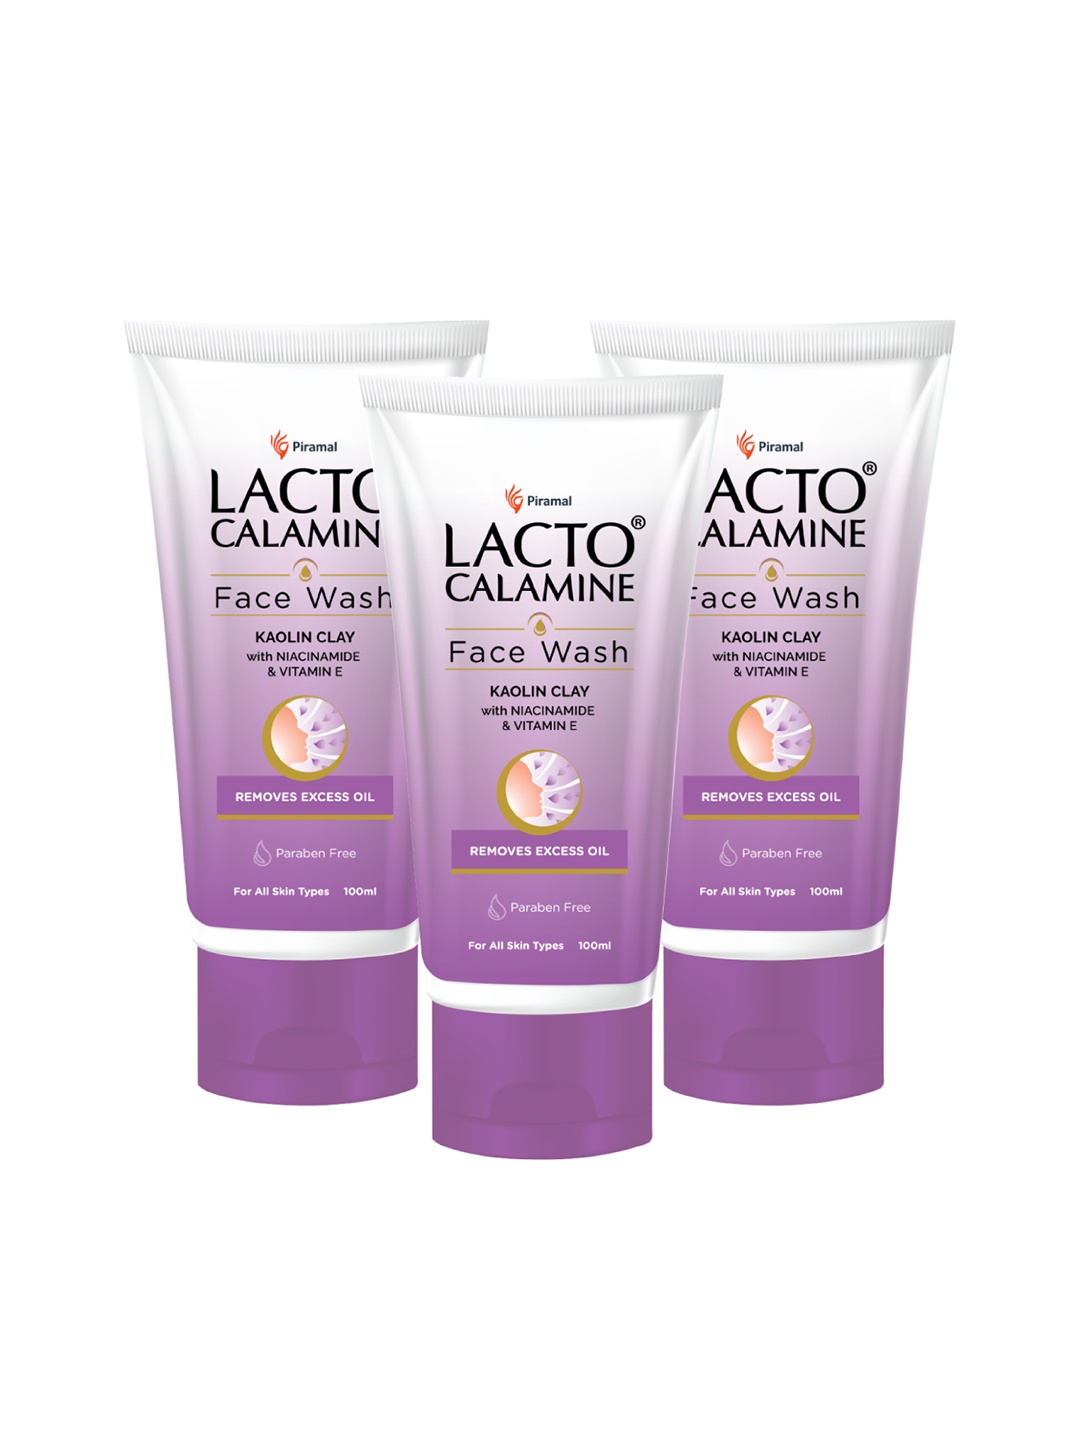 Myntra - Lacto Calamine Set of 3 Kaolin Clay Face Wash with Niacinamide & Vitamin E – 100ml each Price